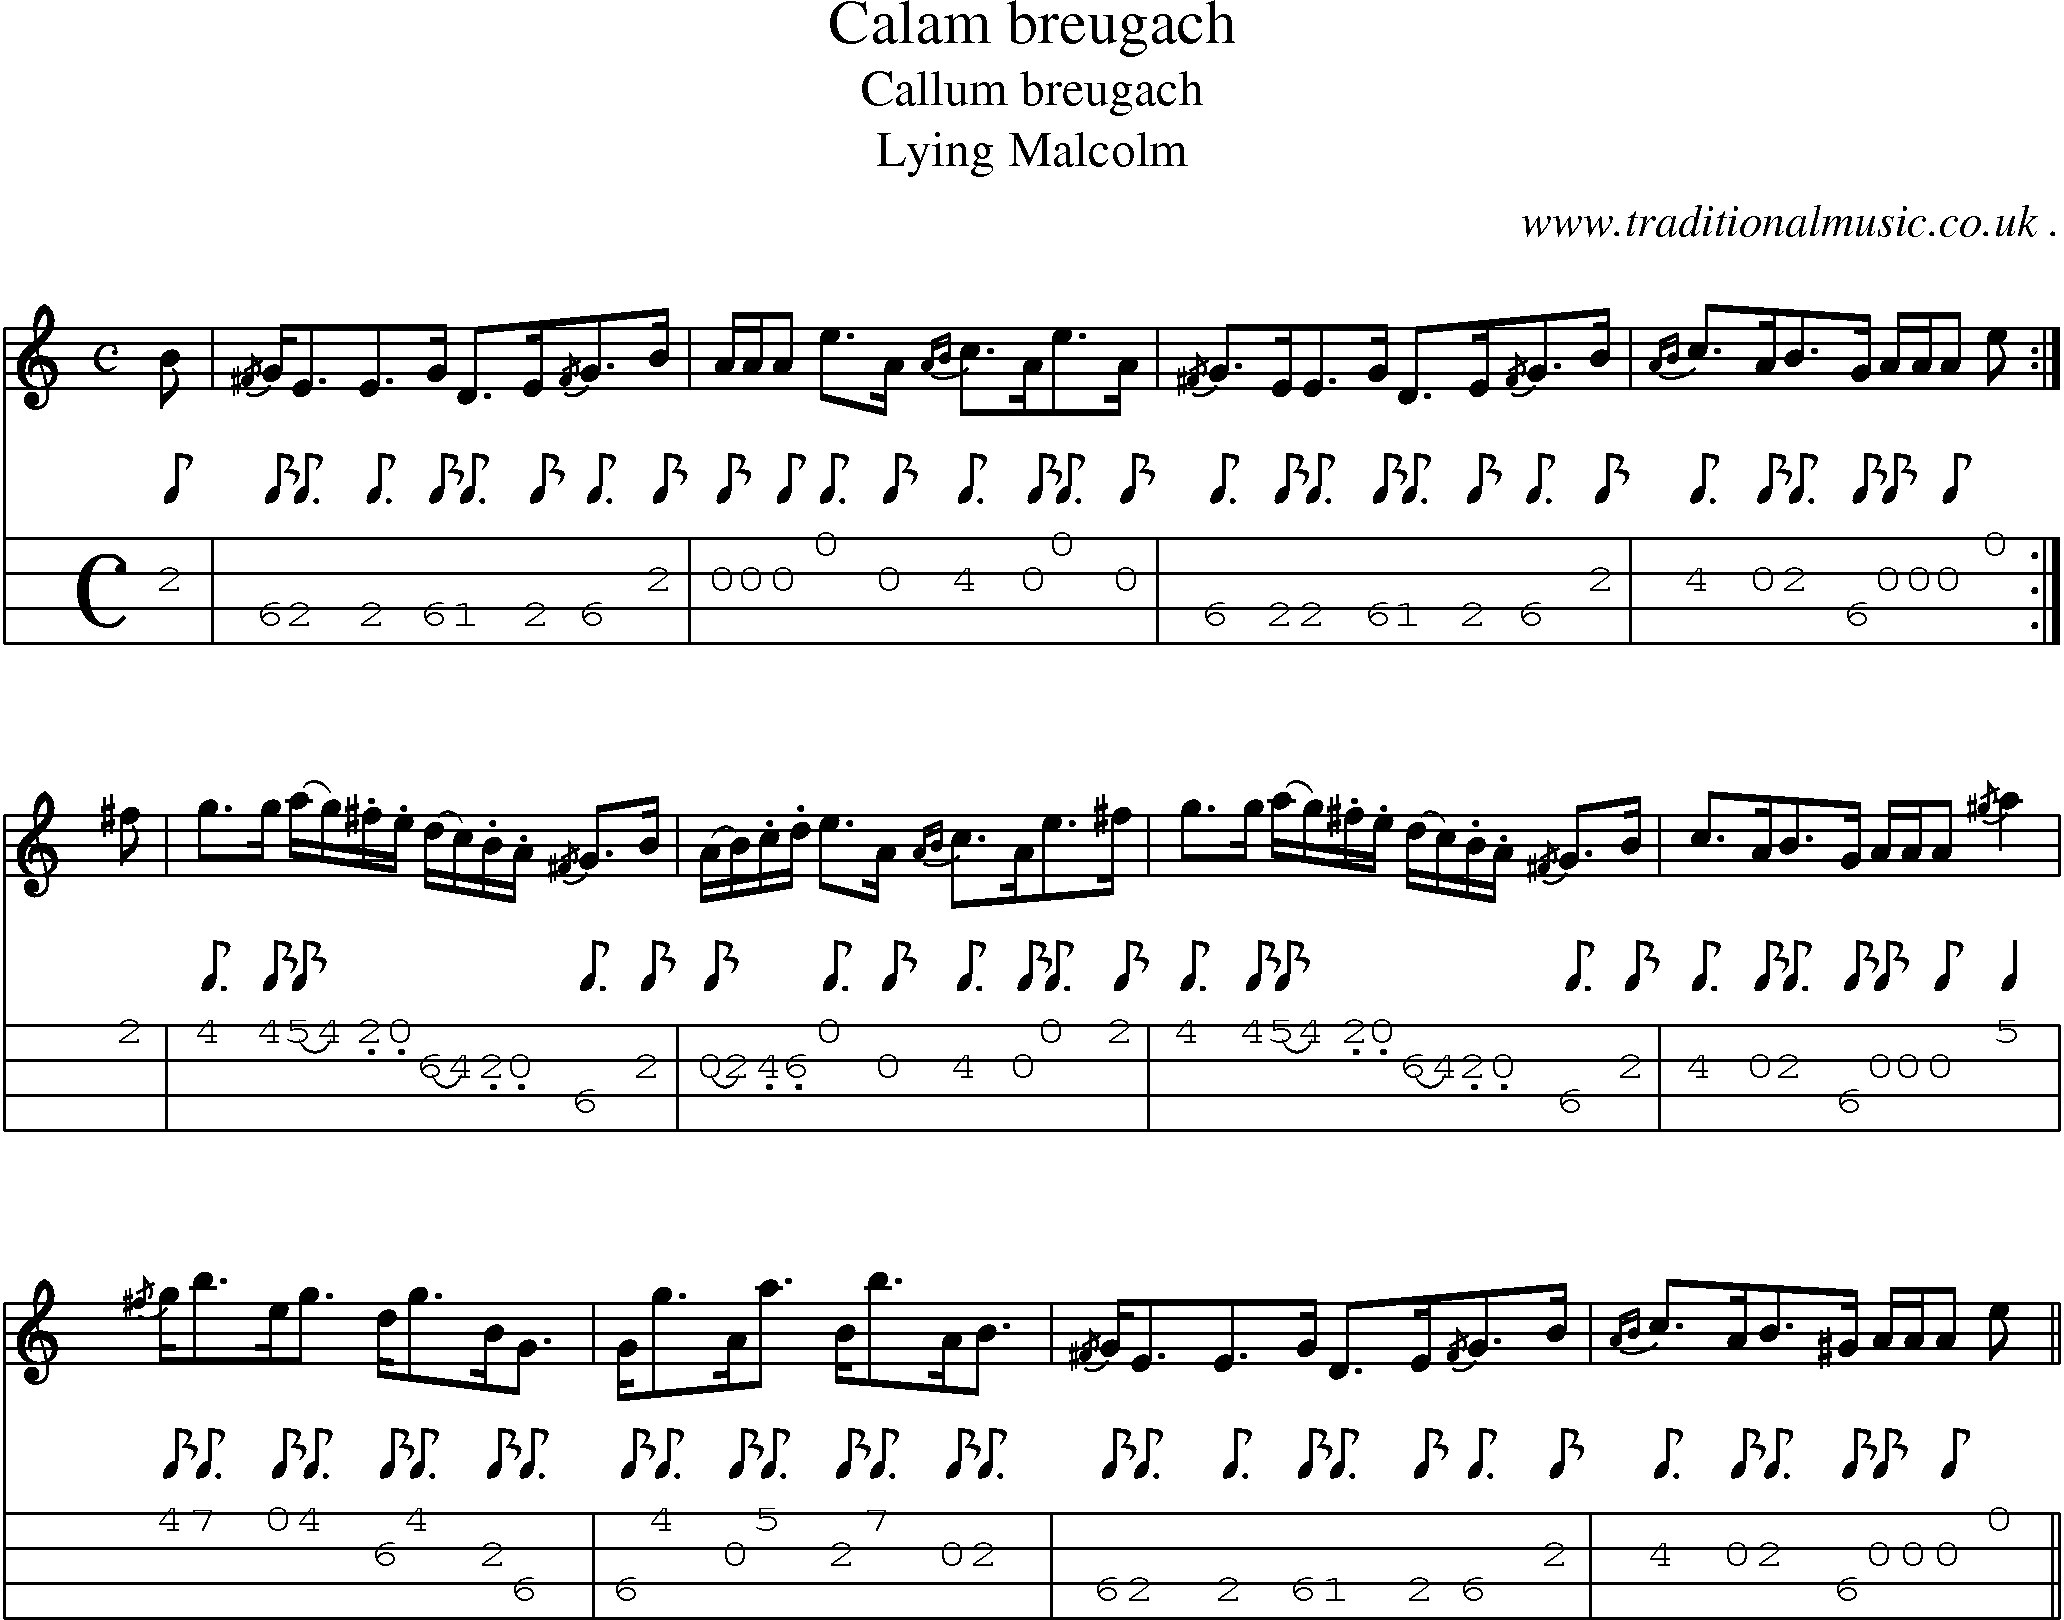 Sheet-music  score, Chords and Mandolin Tabs for Calam Breugach